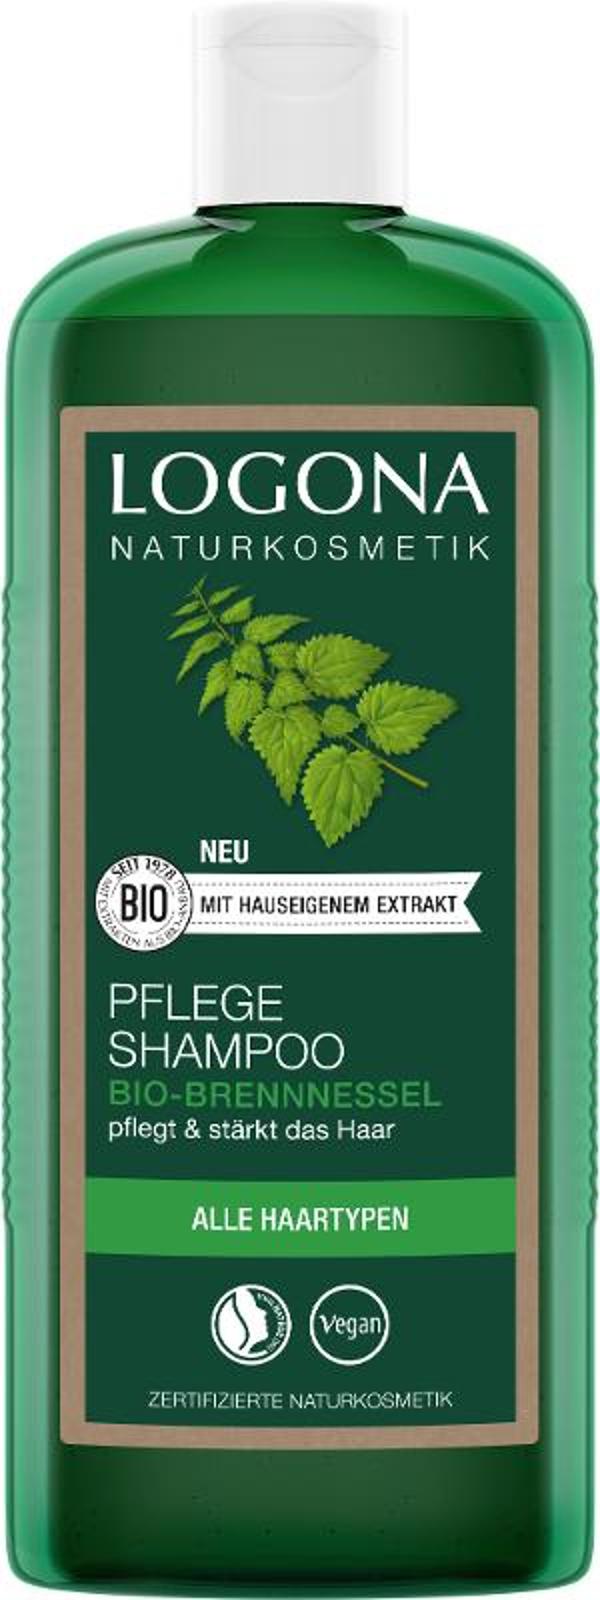 Produktfoto zu Pflege Shampoo Brennessel 500 ml Logona